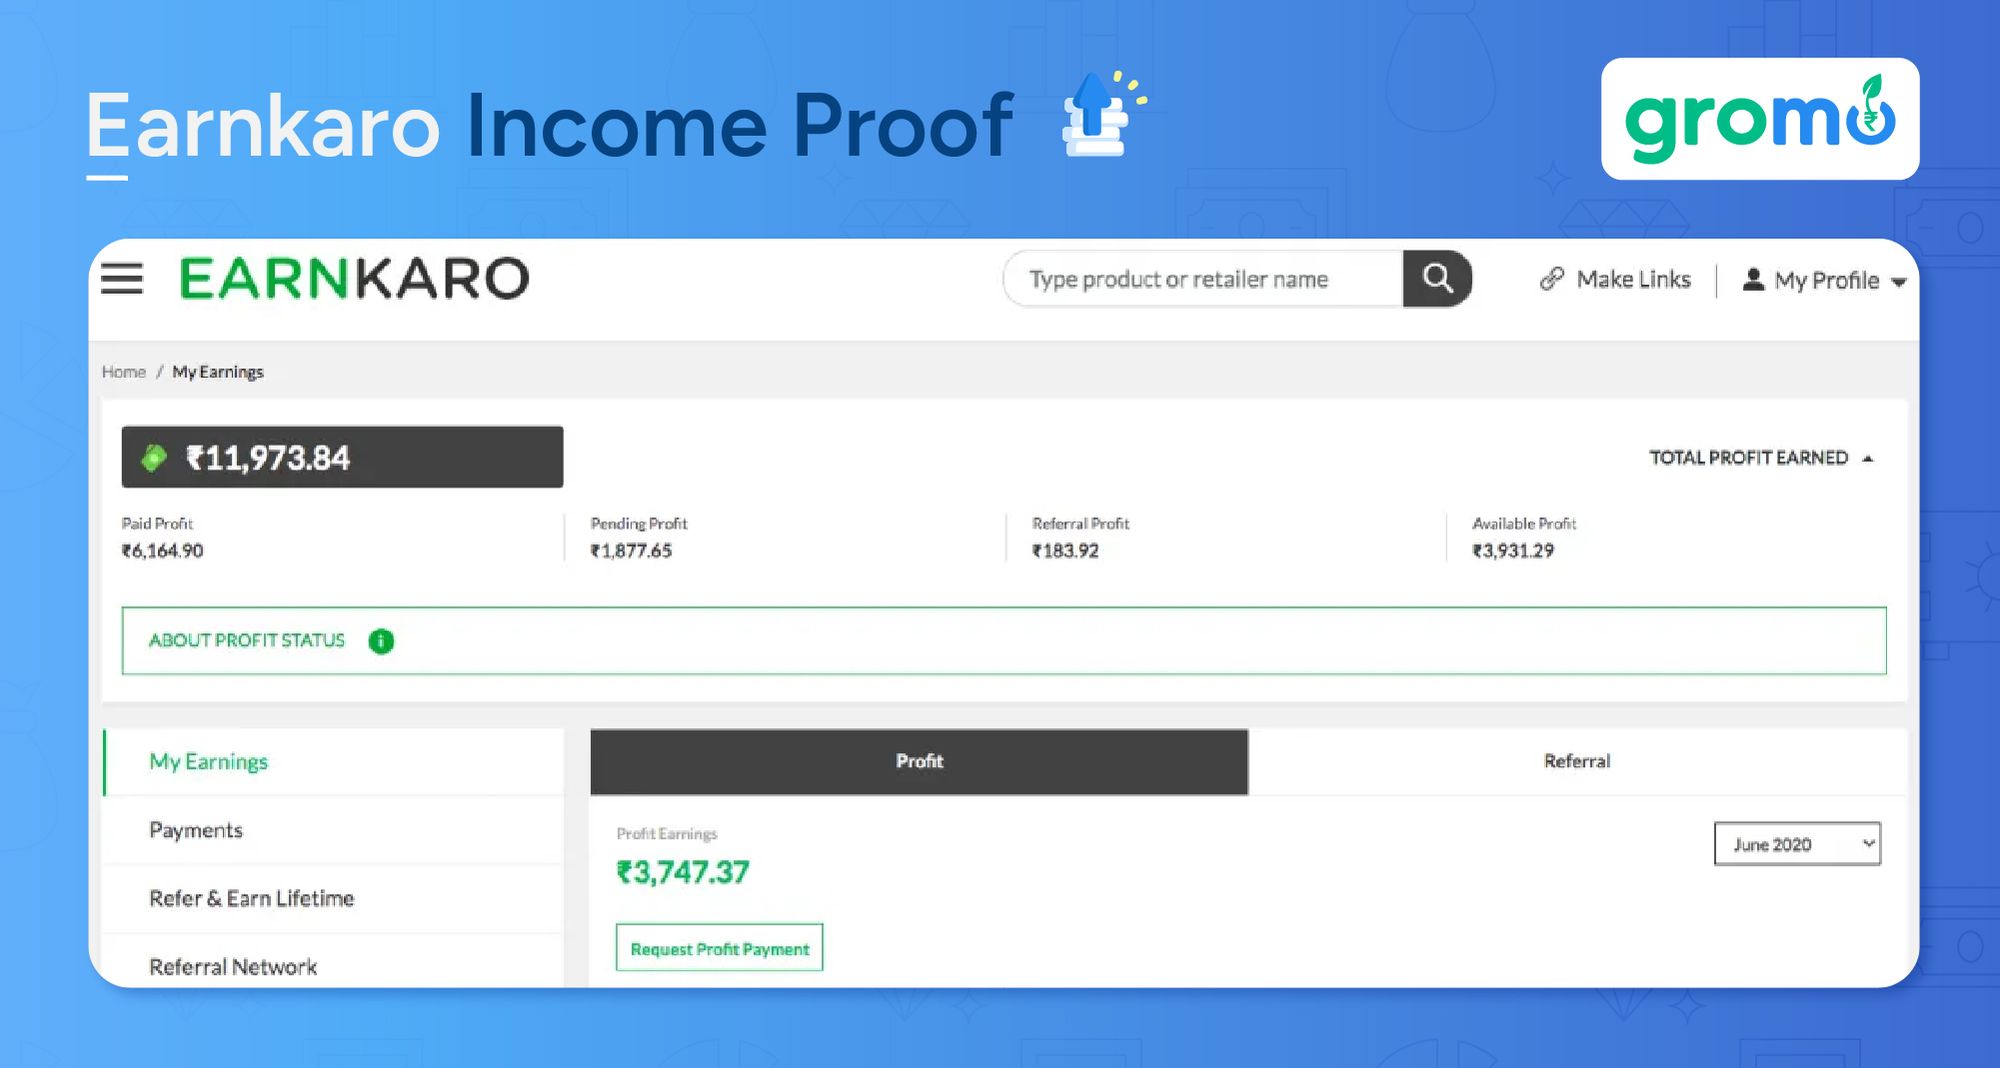 Earnkaro Income Proof - Best Ways to Make Money Online - GroMo